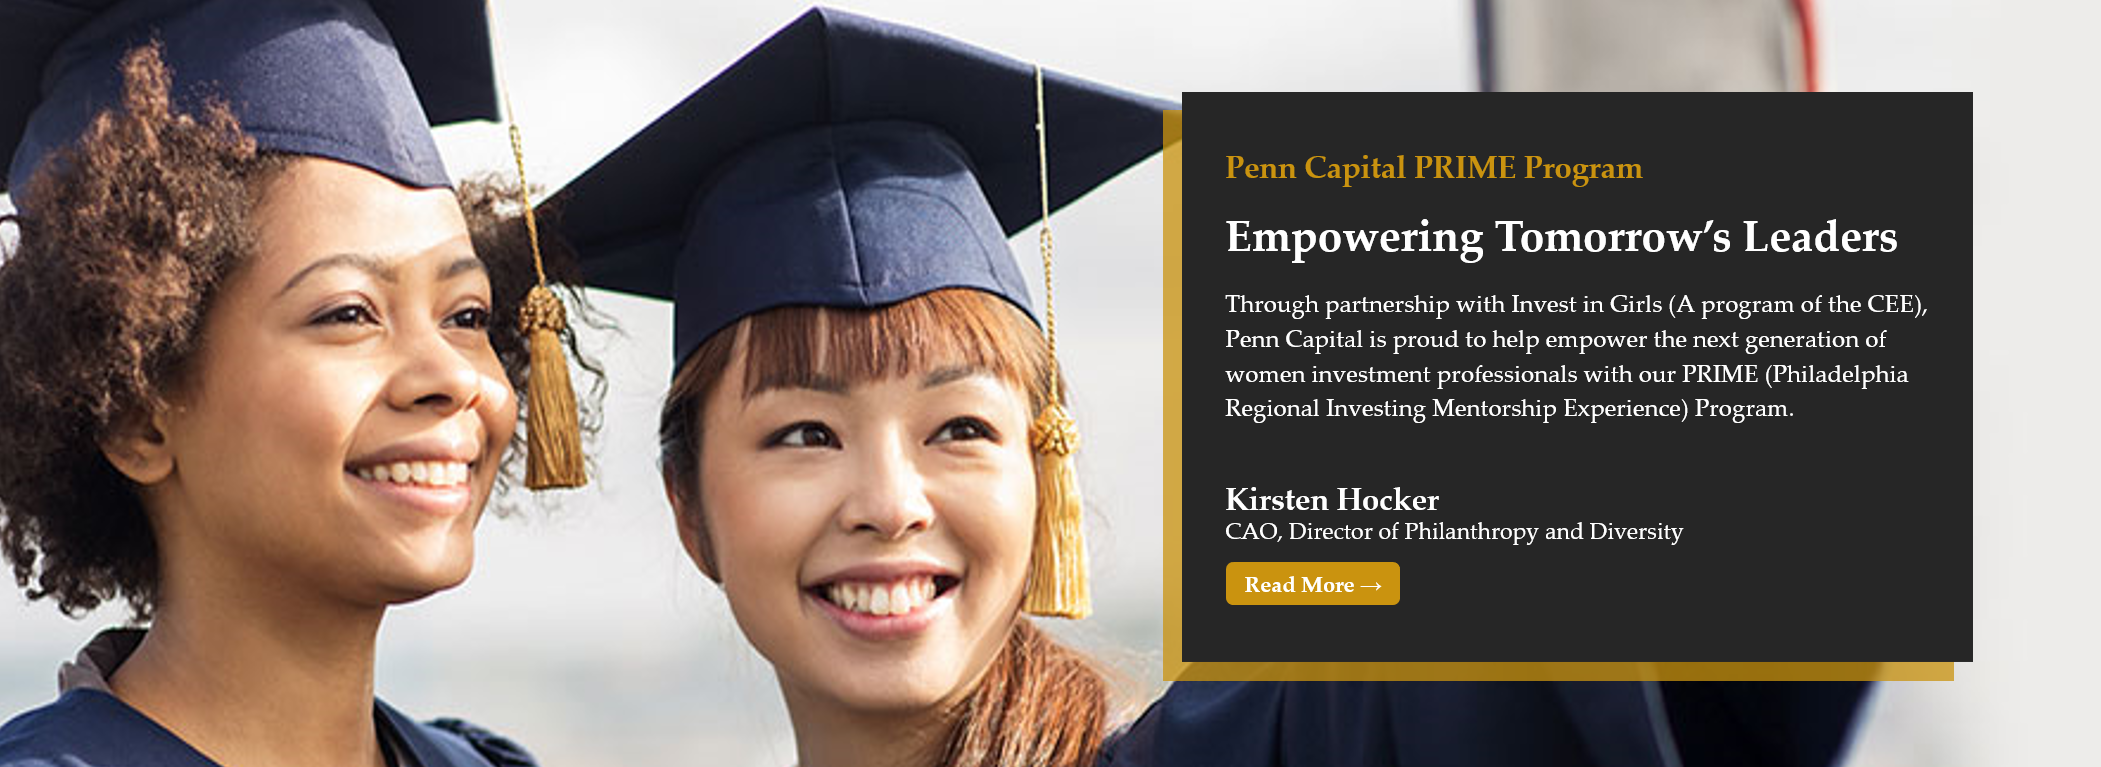 Penn Capital and Invest in Girls: PRIME Program